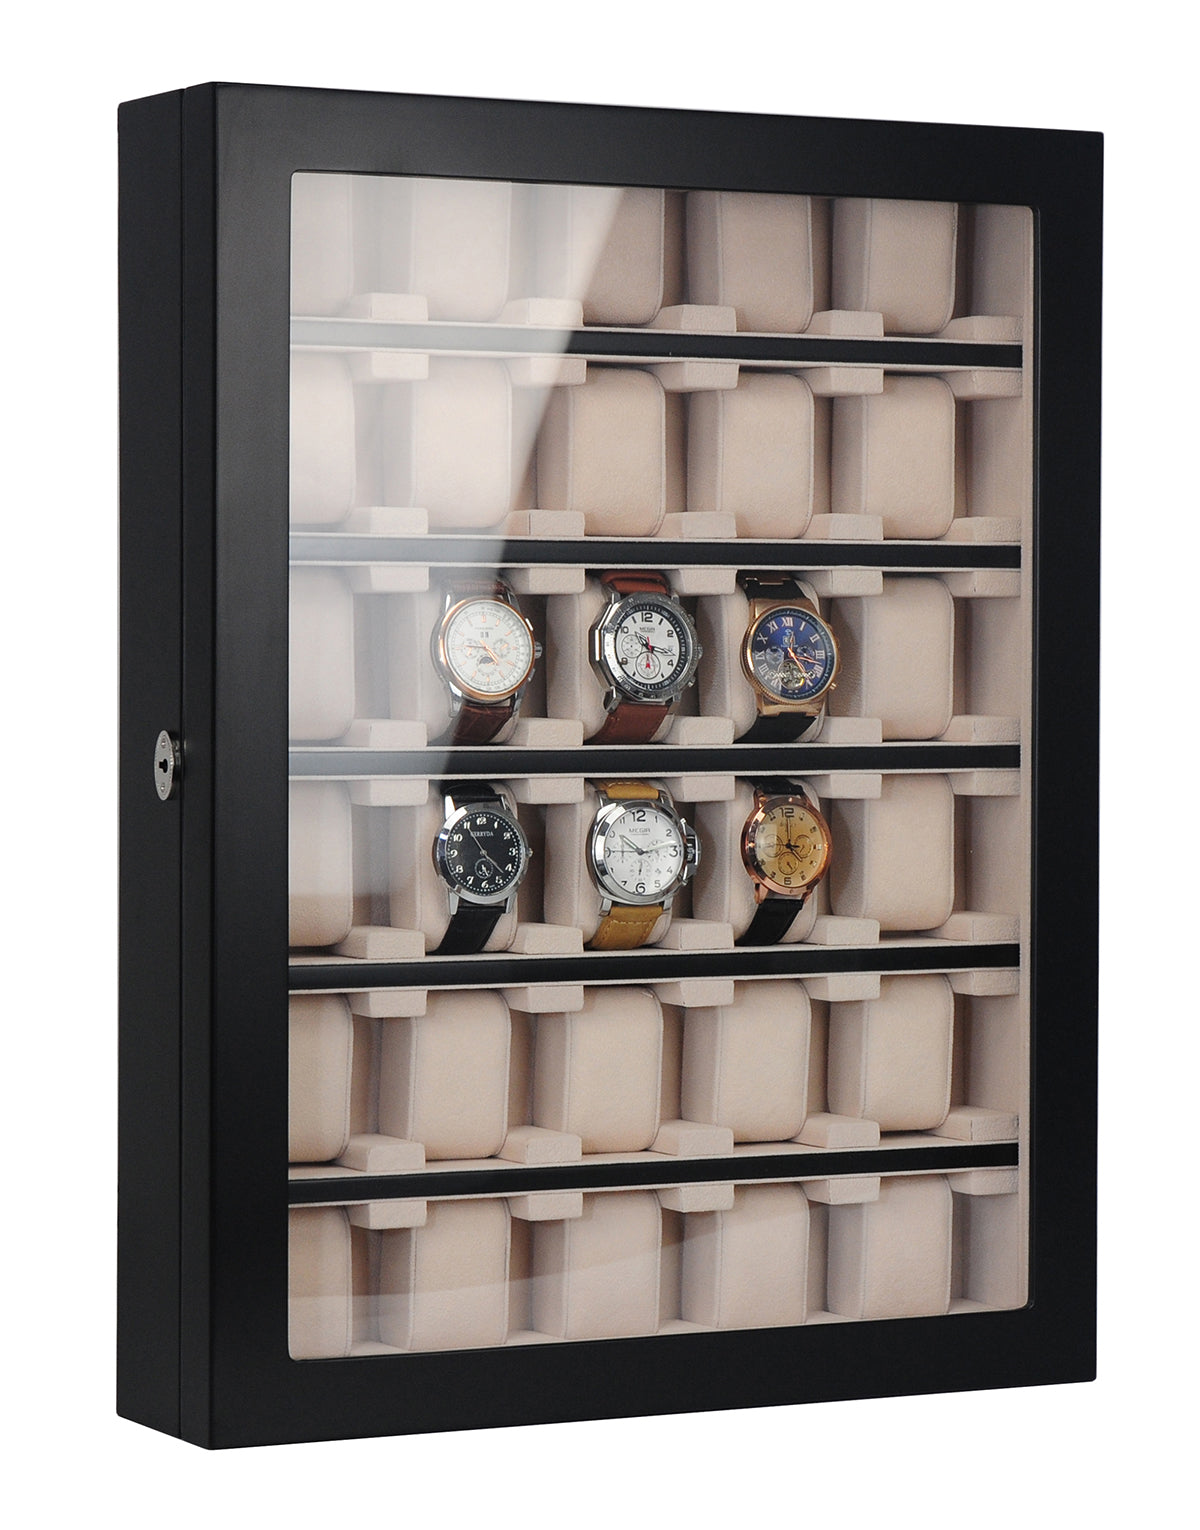 Hand Made 30 Watch Cabinet Luxury Case Storage Display Box Jewellery Watches 51